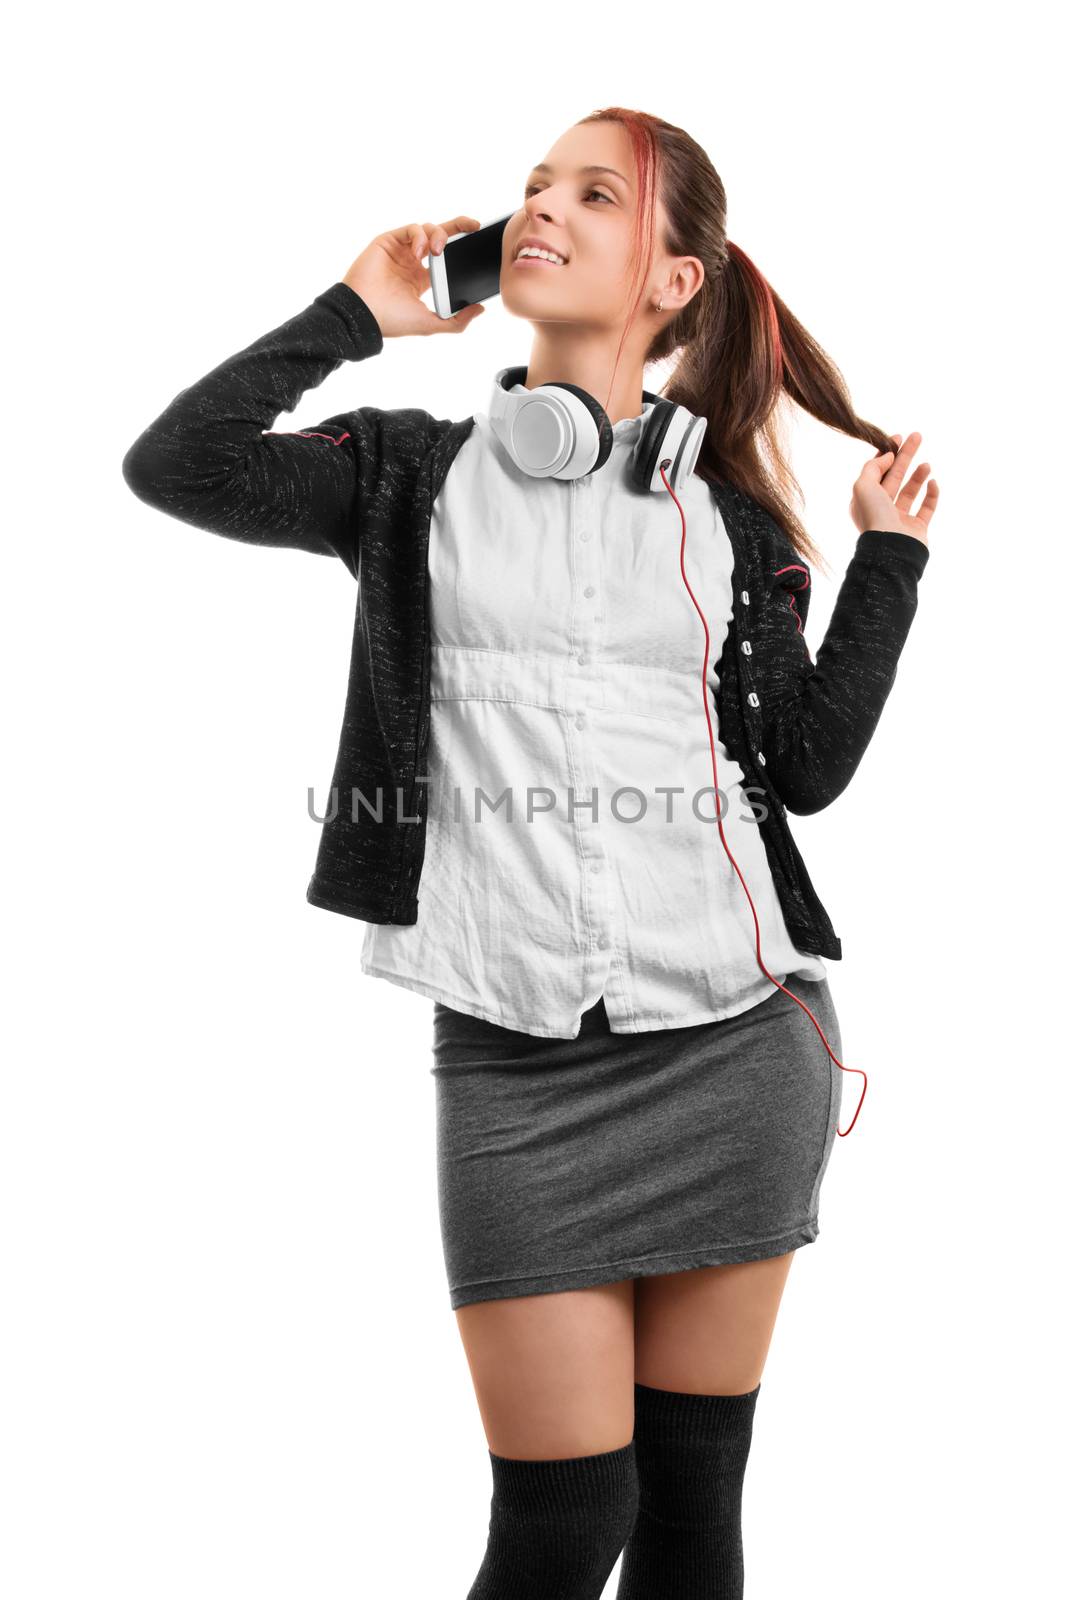 Girl in school uniform talking on the phone by Mendelex